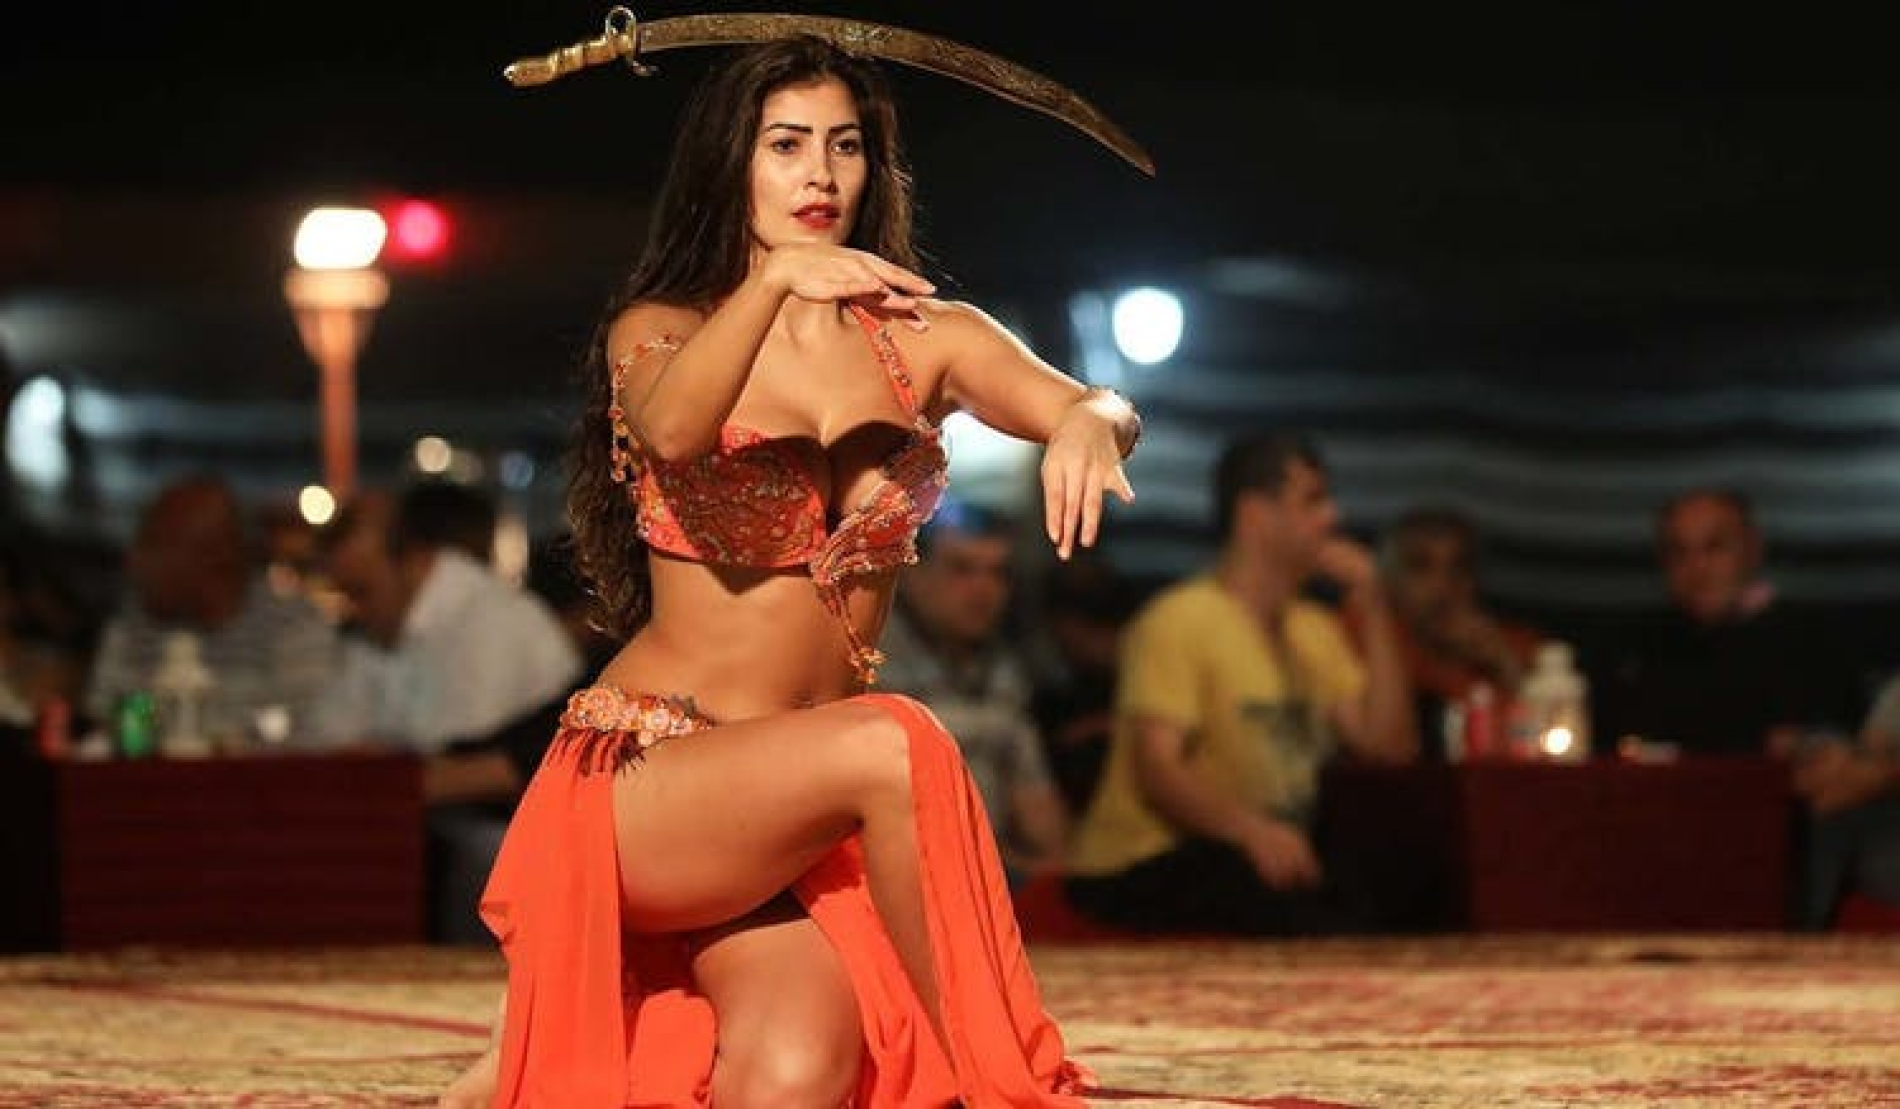 Арабские музыка живота. Танец живота Дубай сафари. Dubai Desert Safari belly Dance. Belly Dance Dubai Desert. Сафари с арабским танцам Дубай.